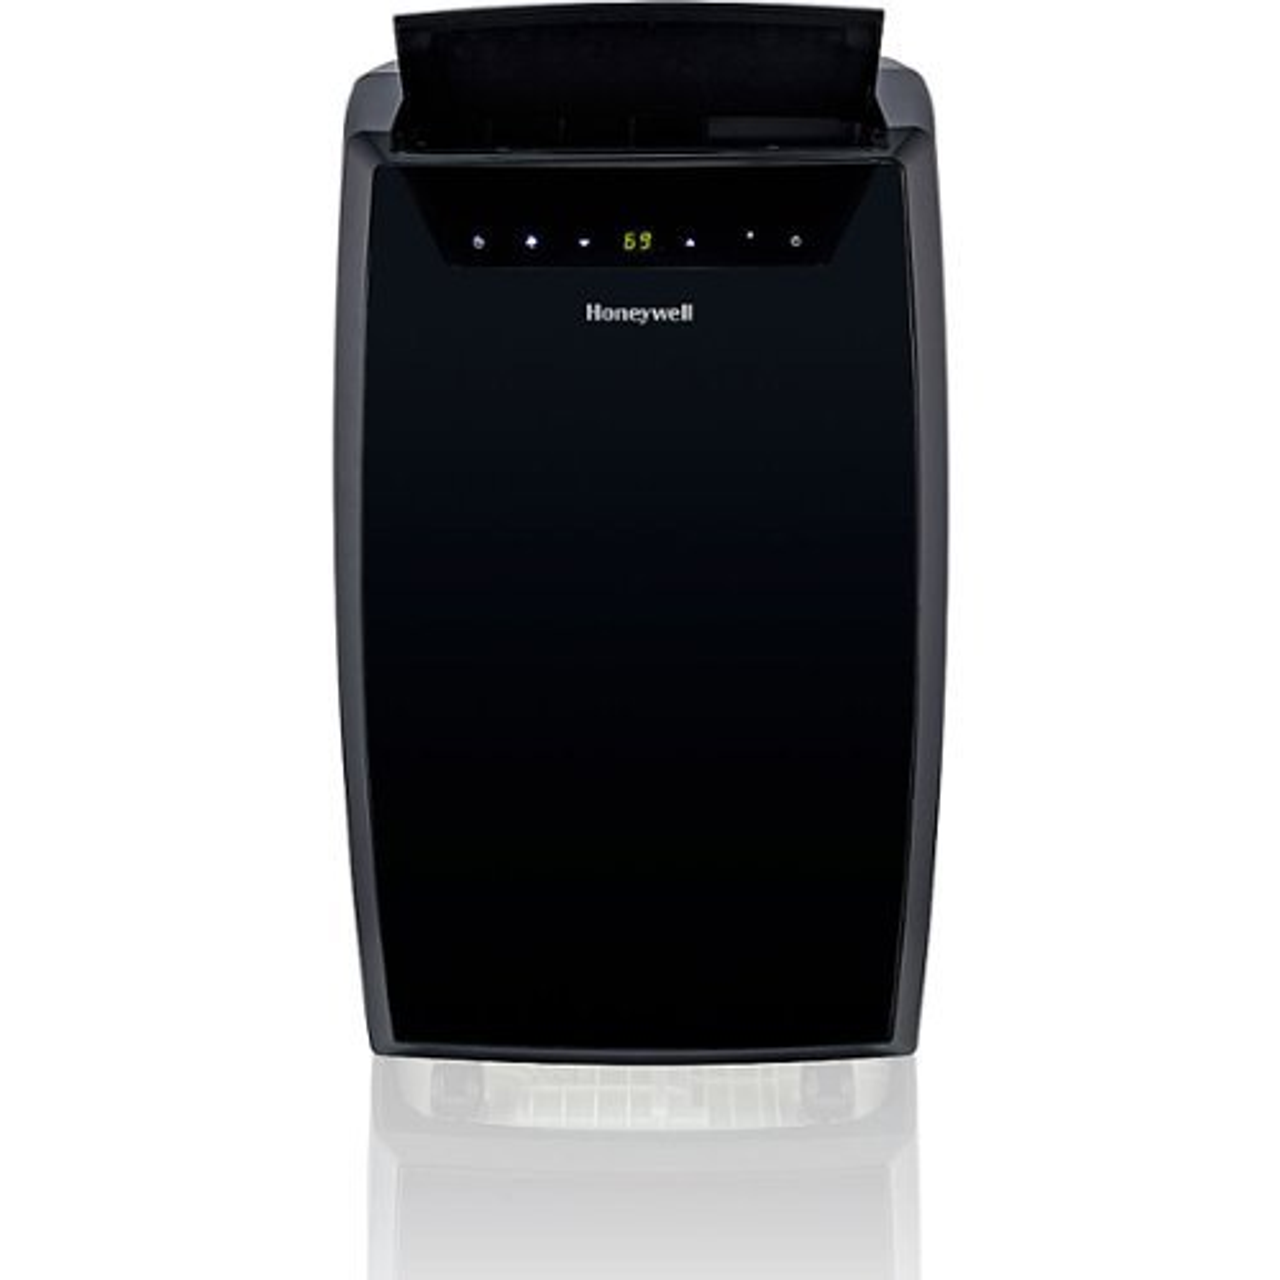 Honeywell - 700 Sq. Ft 14,000 BTU Portable Air Conditioner - Black